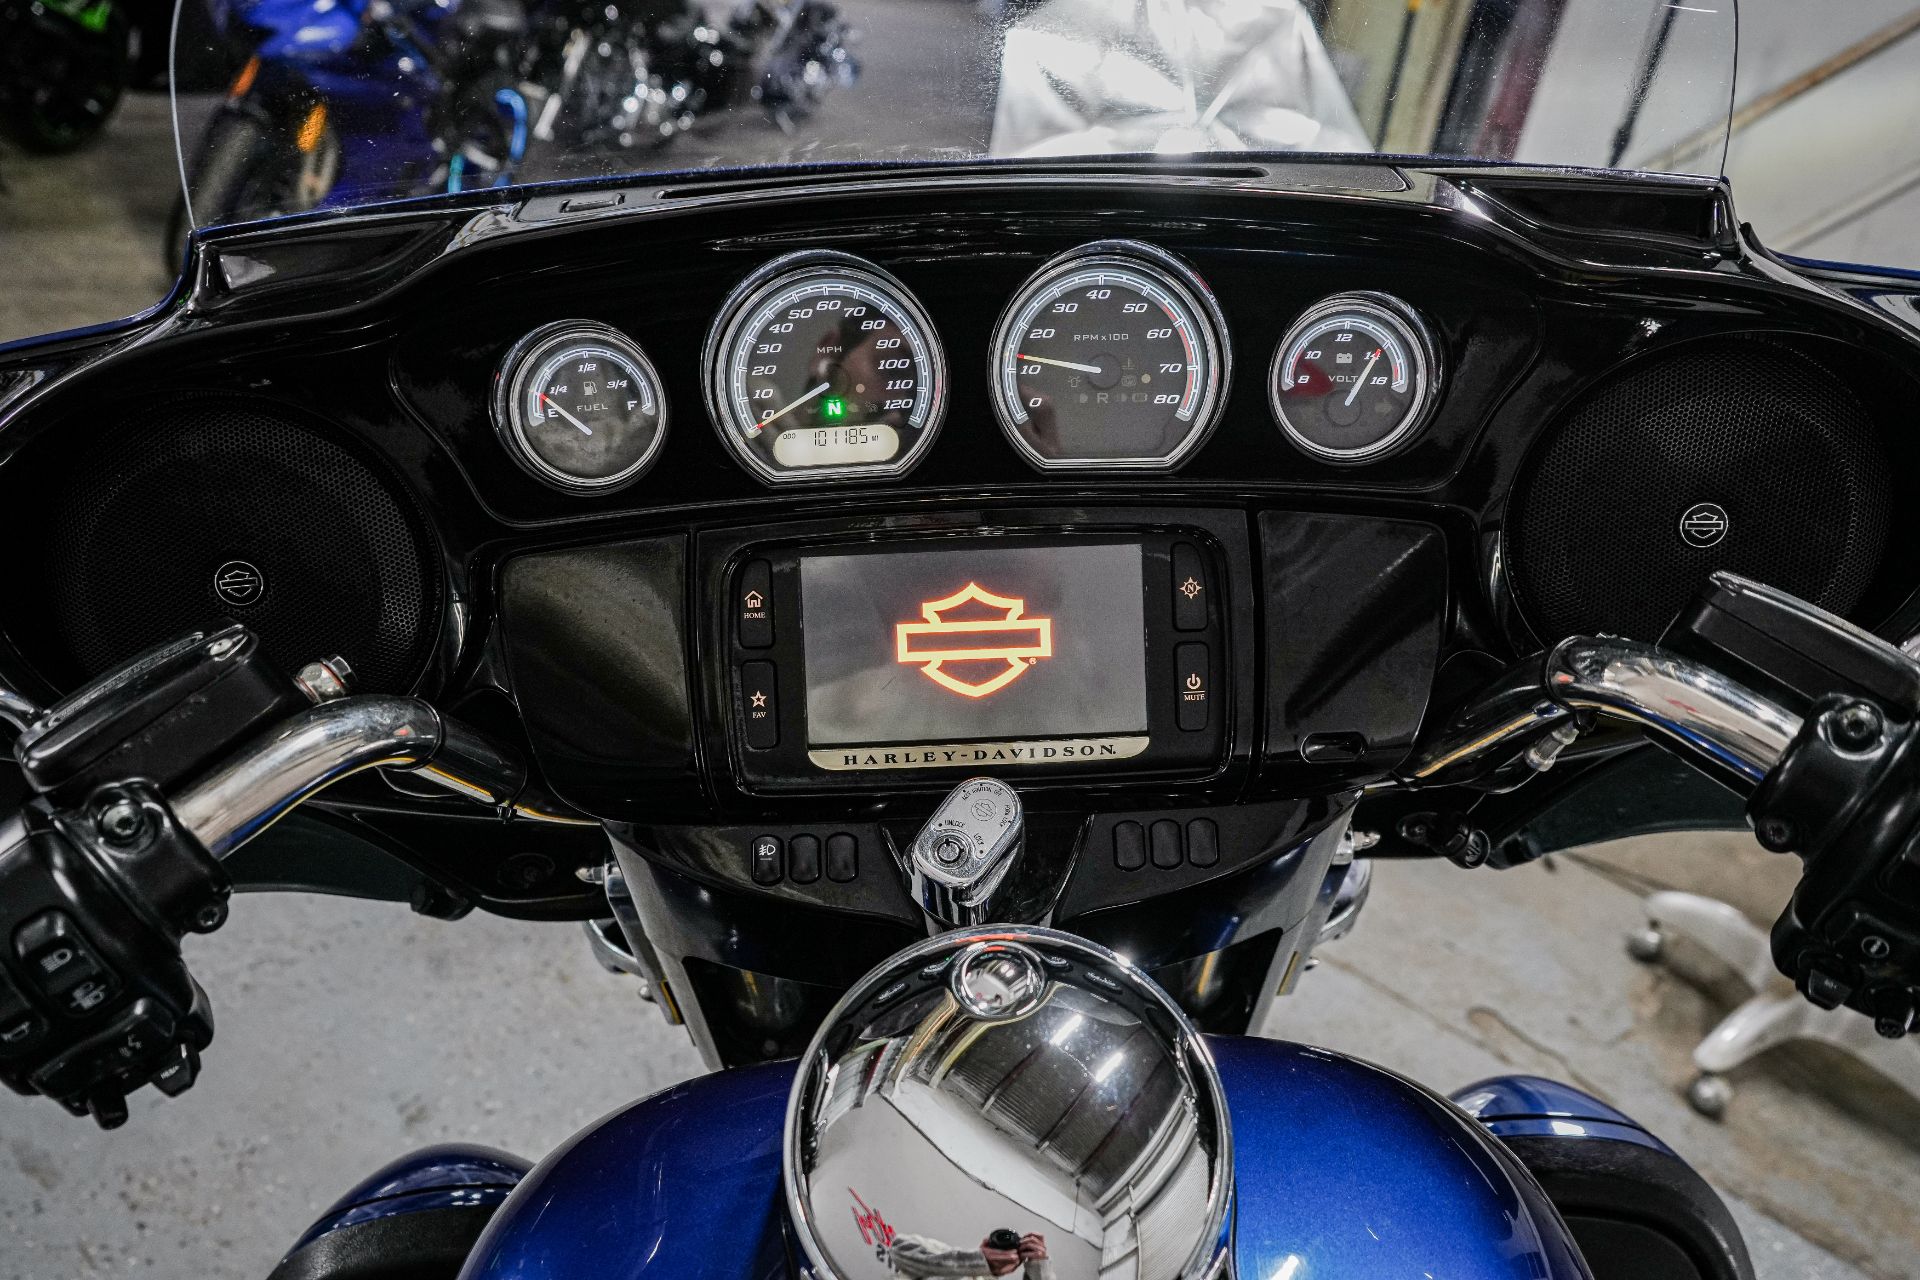 2015 Harley-Davidson Electra Glide® Ultra Classic® in Sacramento, California - Photo 10